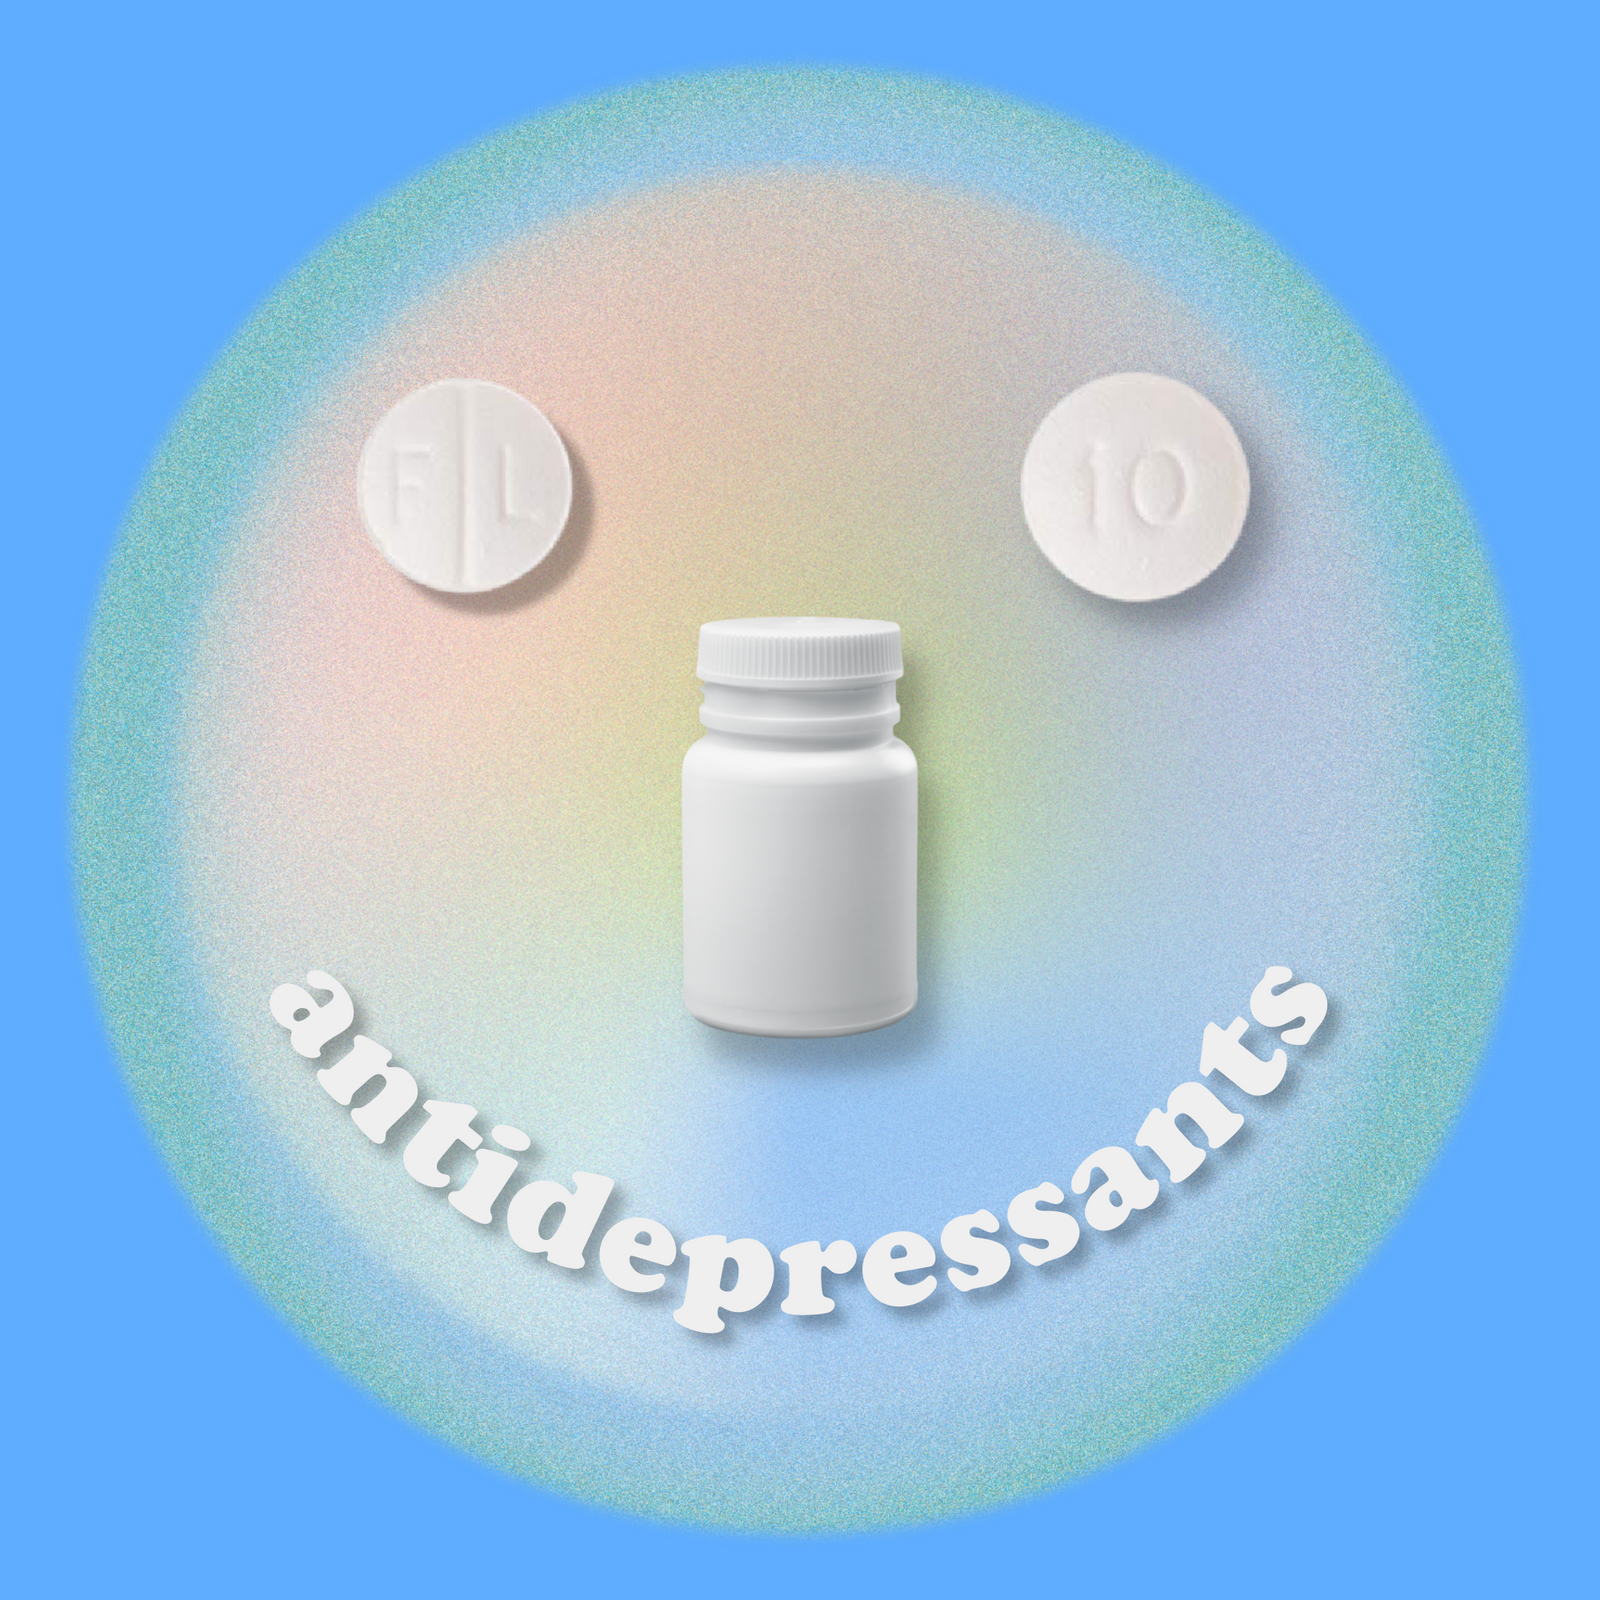 I love my antidepressants